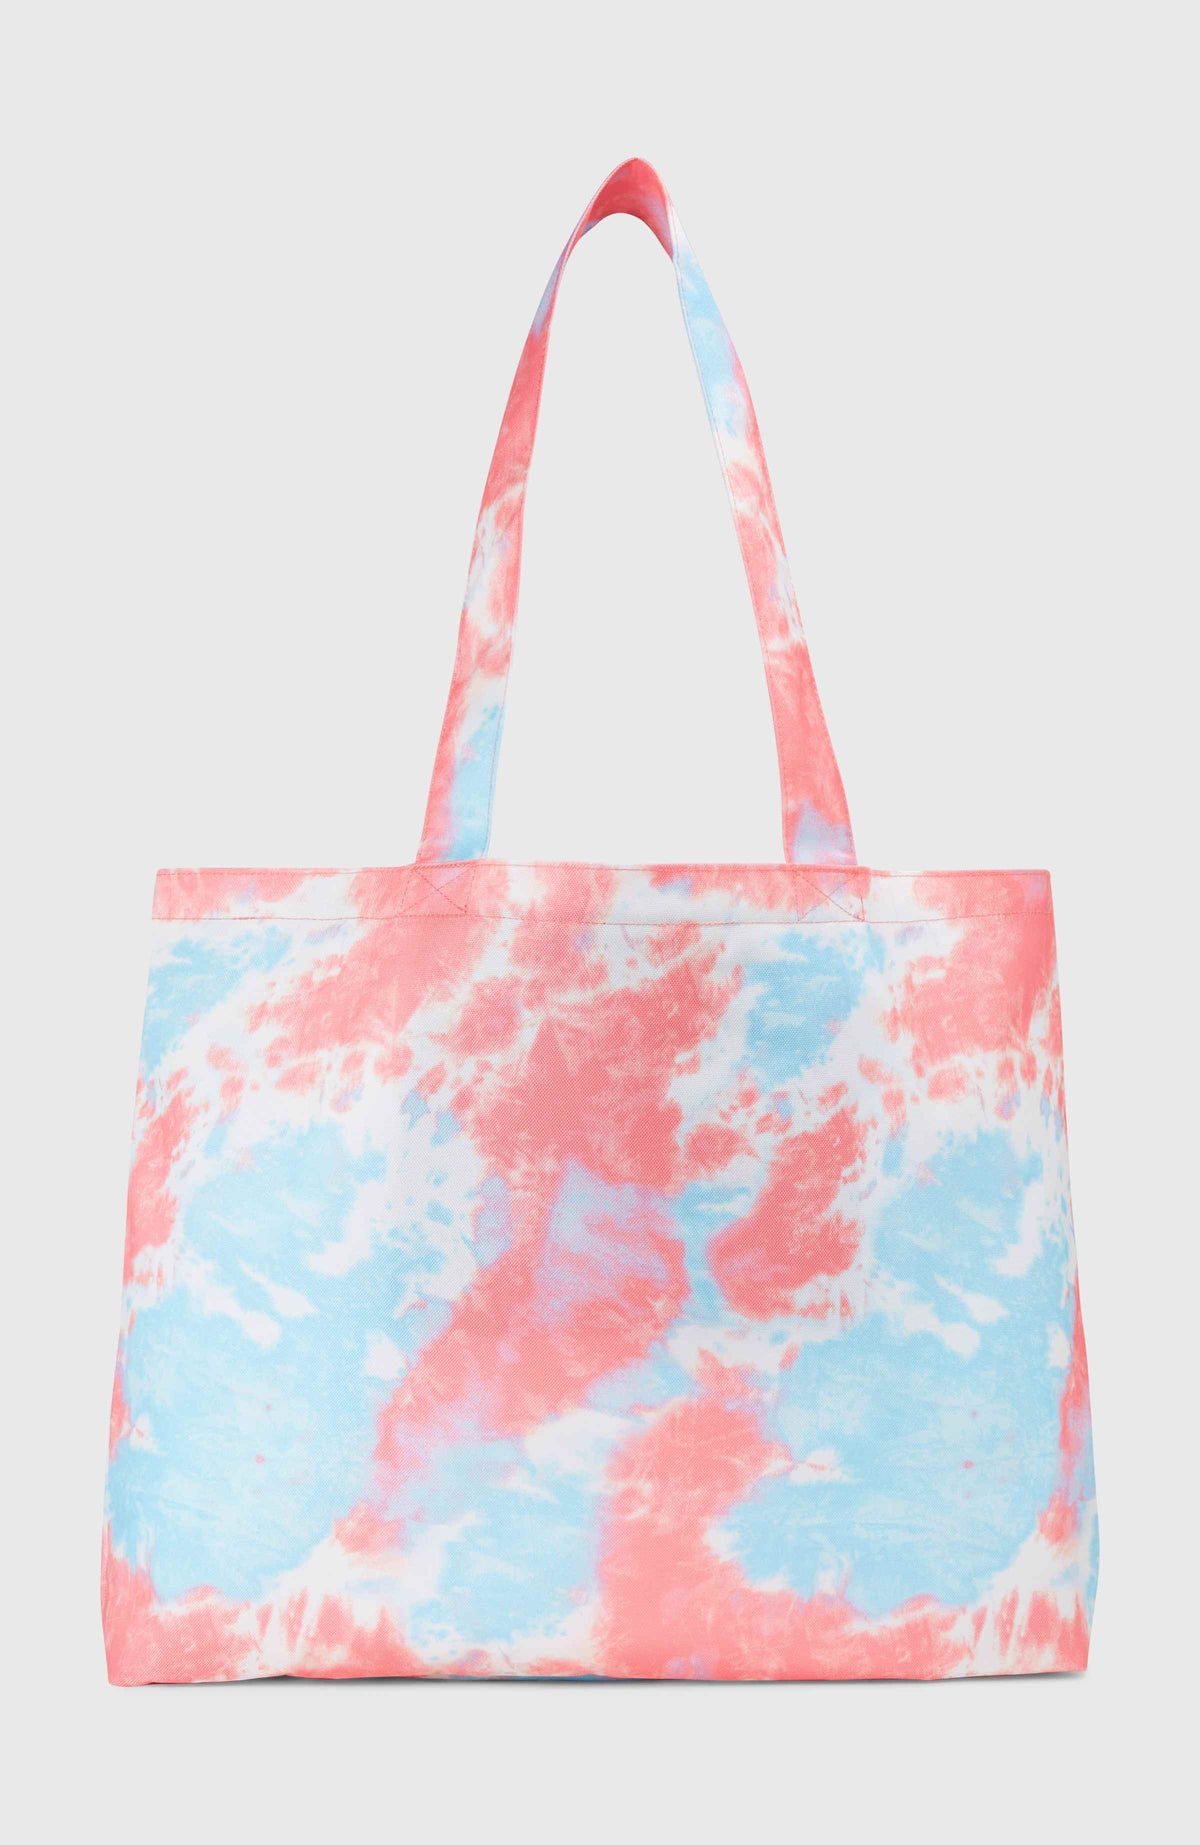 Coastal Print Tote Bag | Pink Ice Cube Tie Dye – O'Neill